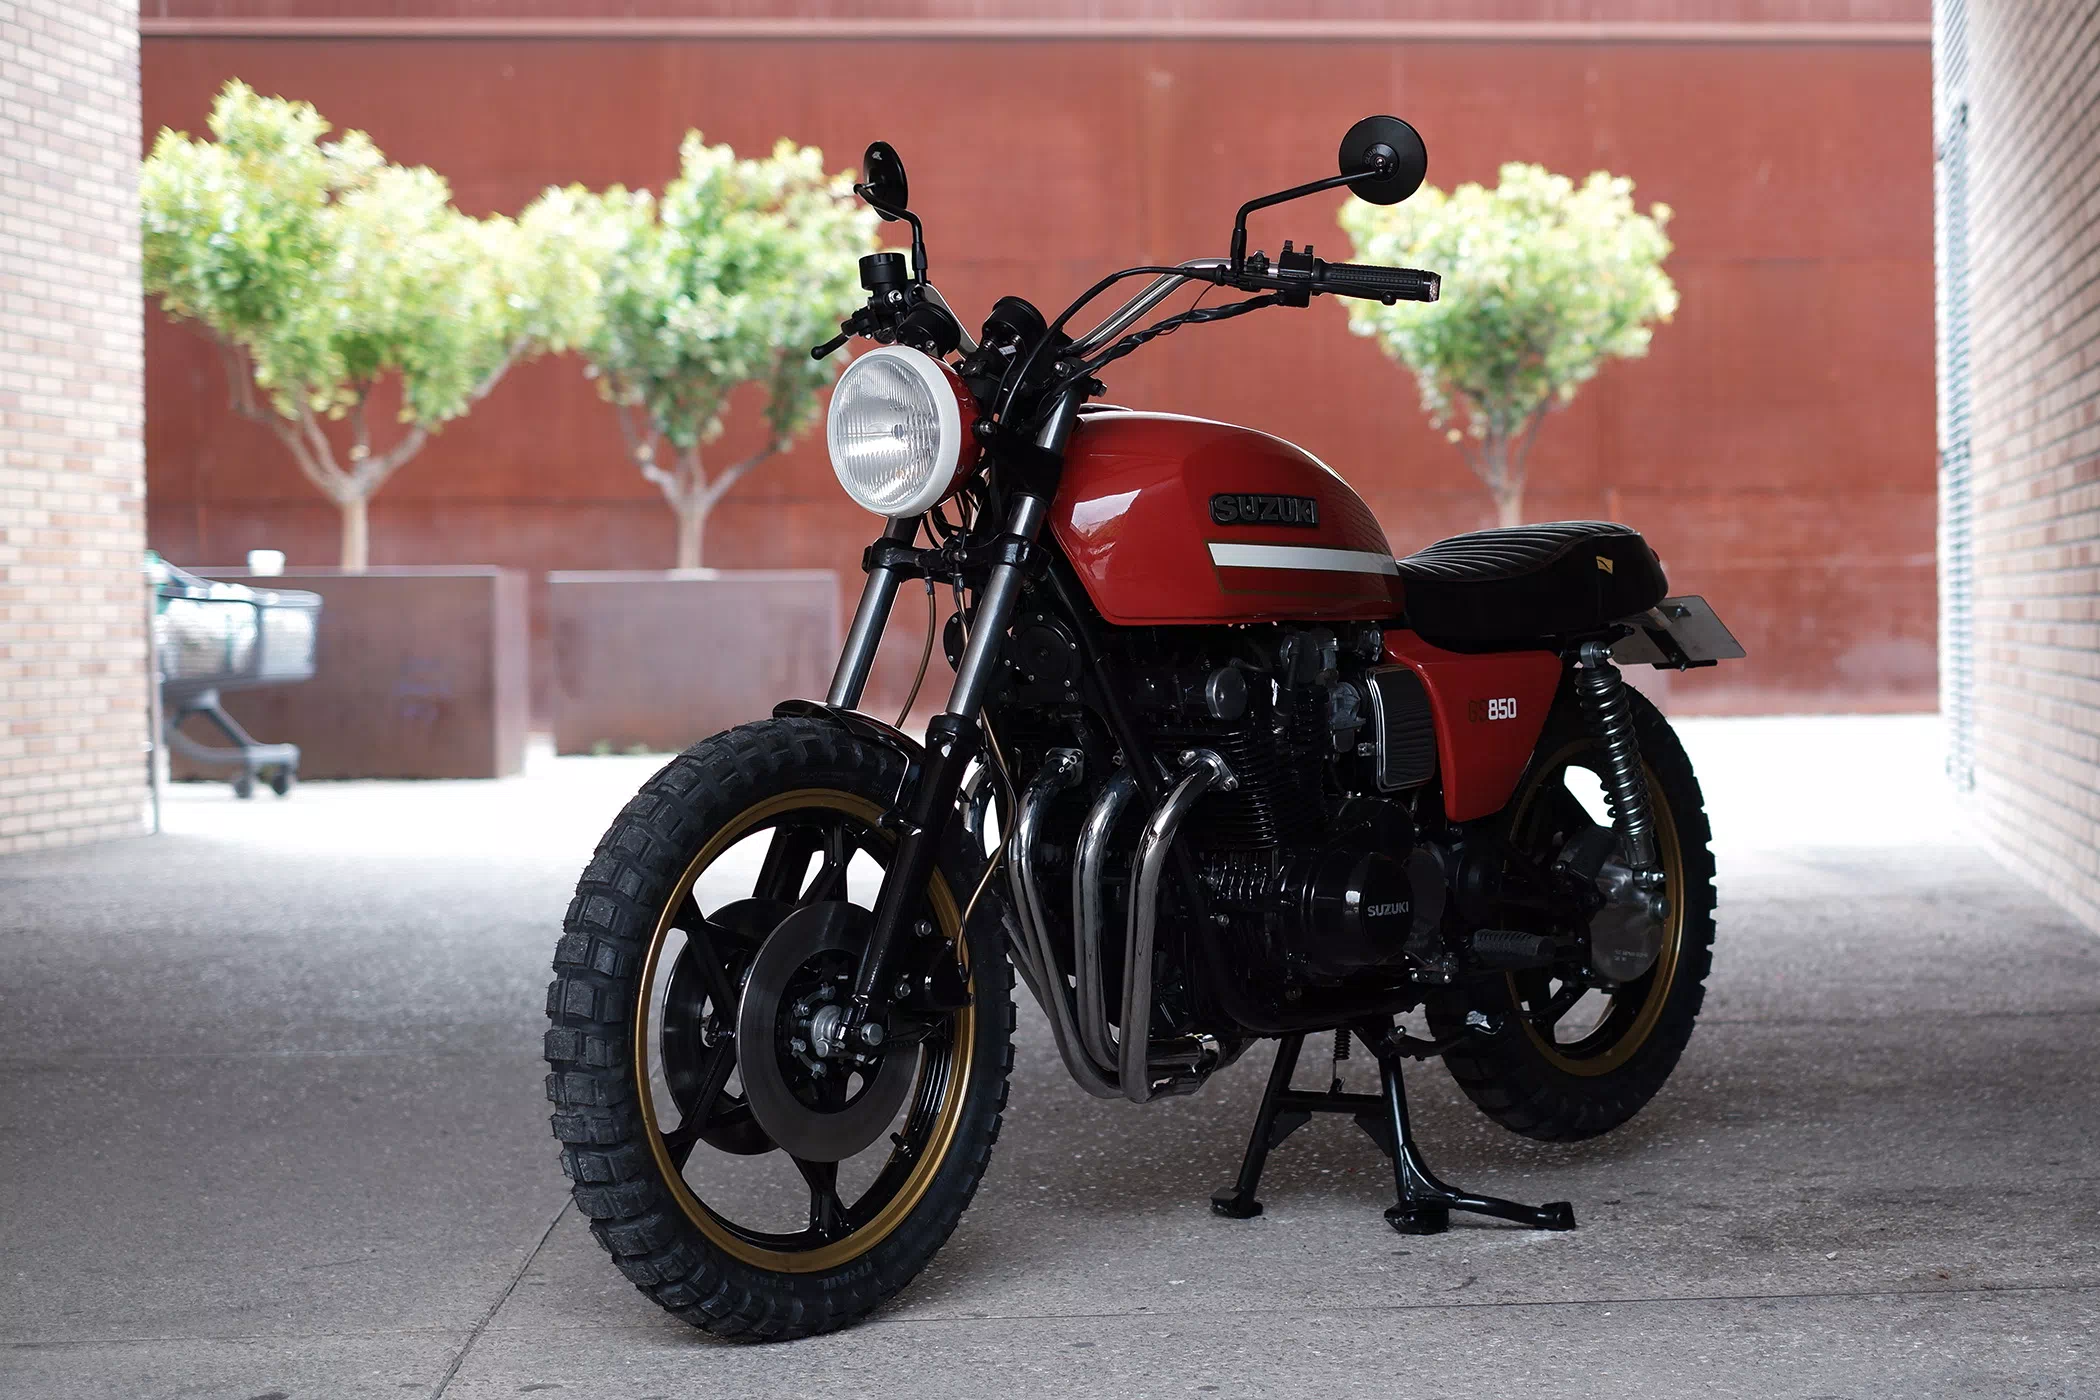 Unik-Motorcycles-SuzukiGS850-Mahogany-012